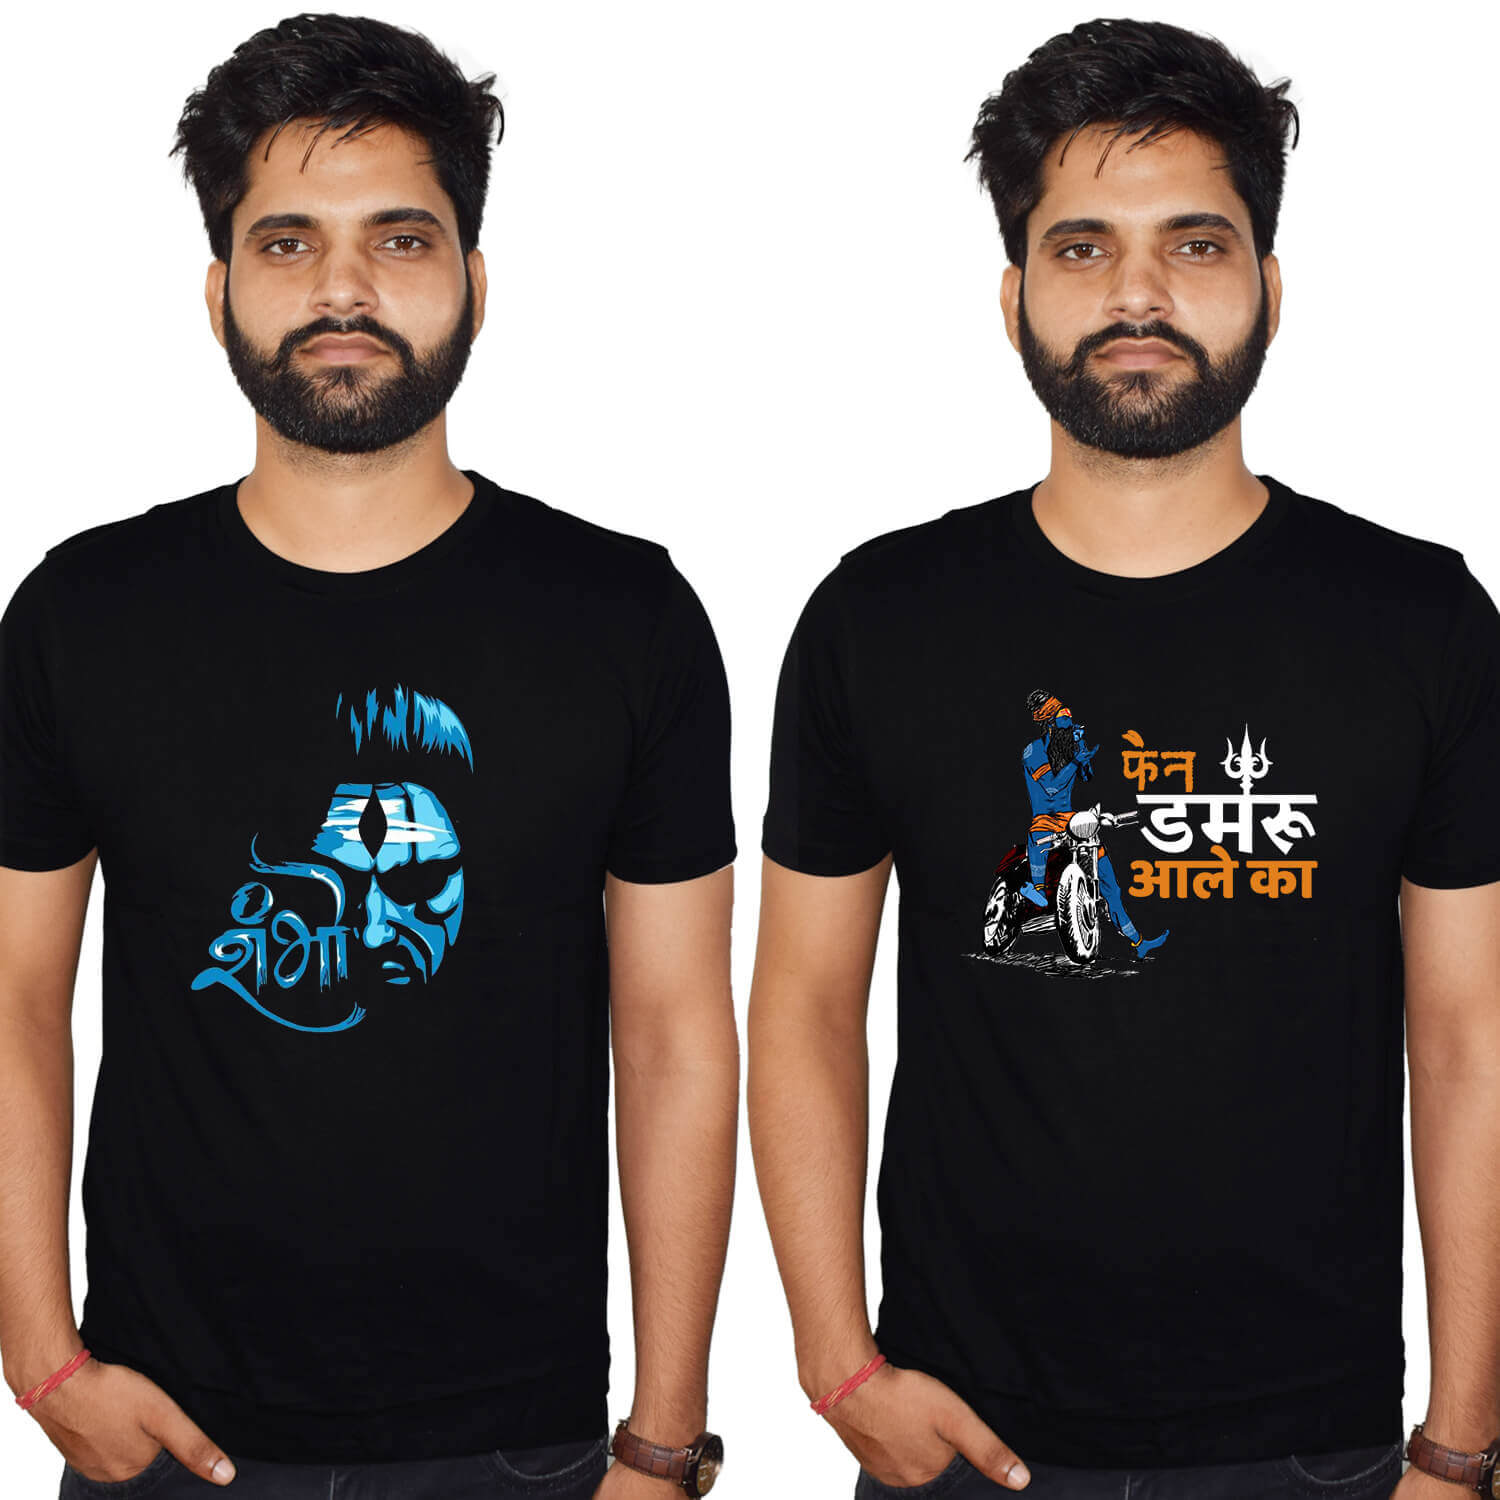 Shiv Shambhu Printed black T-Shirt Combo